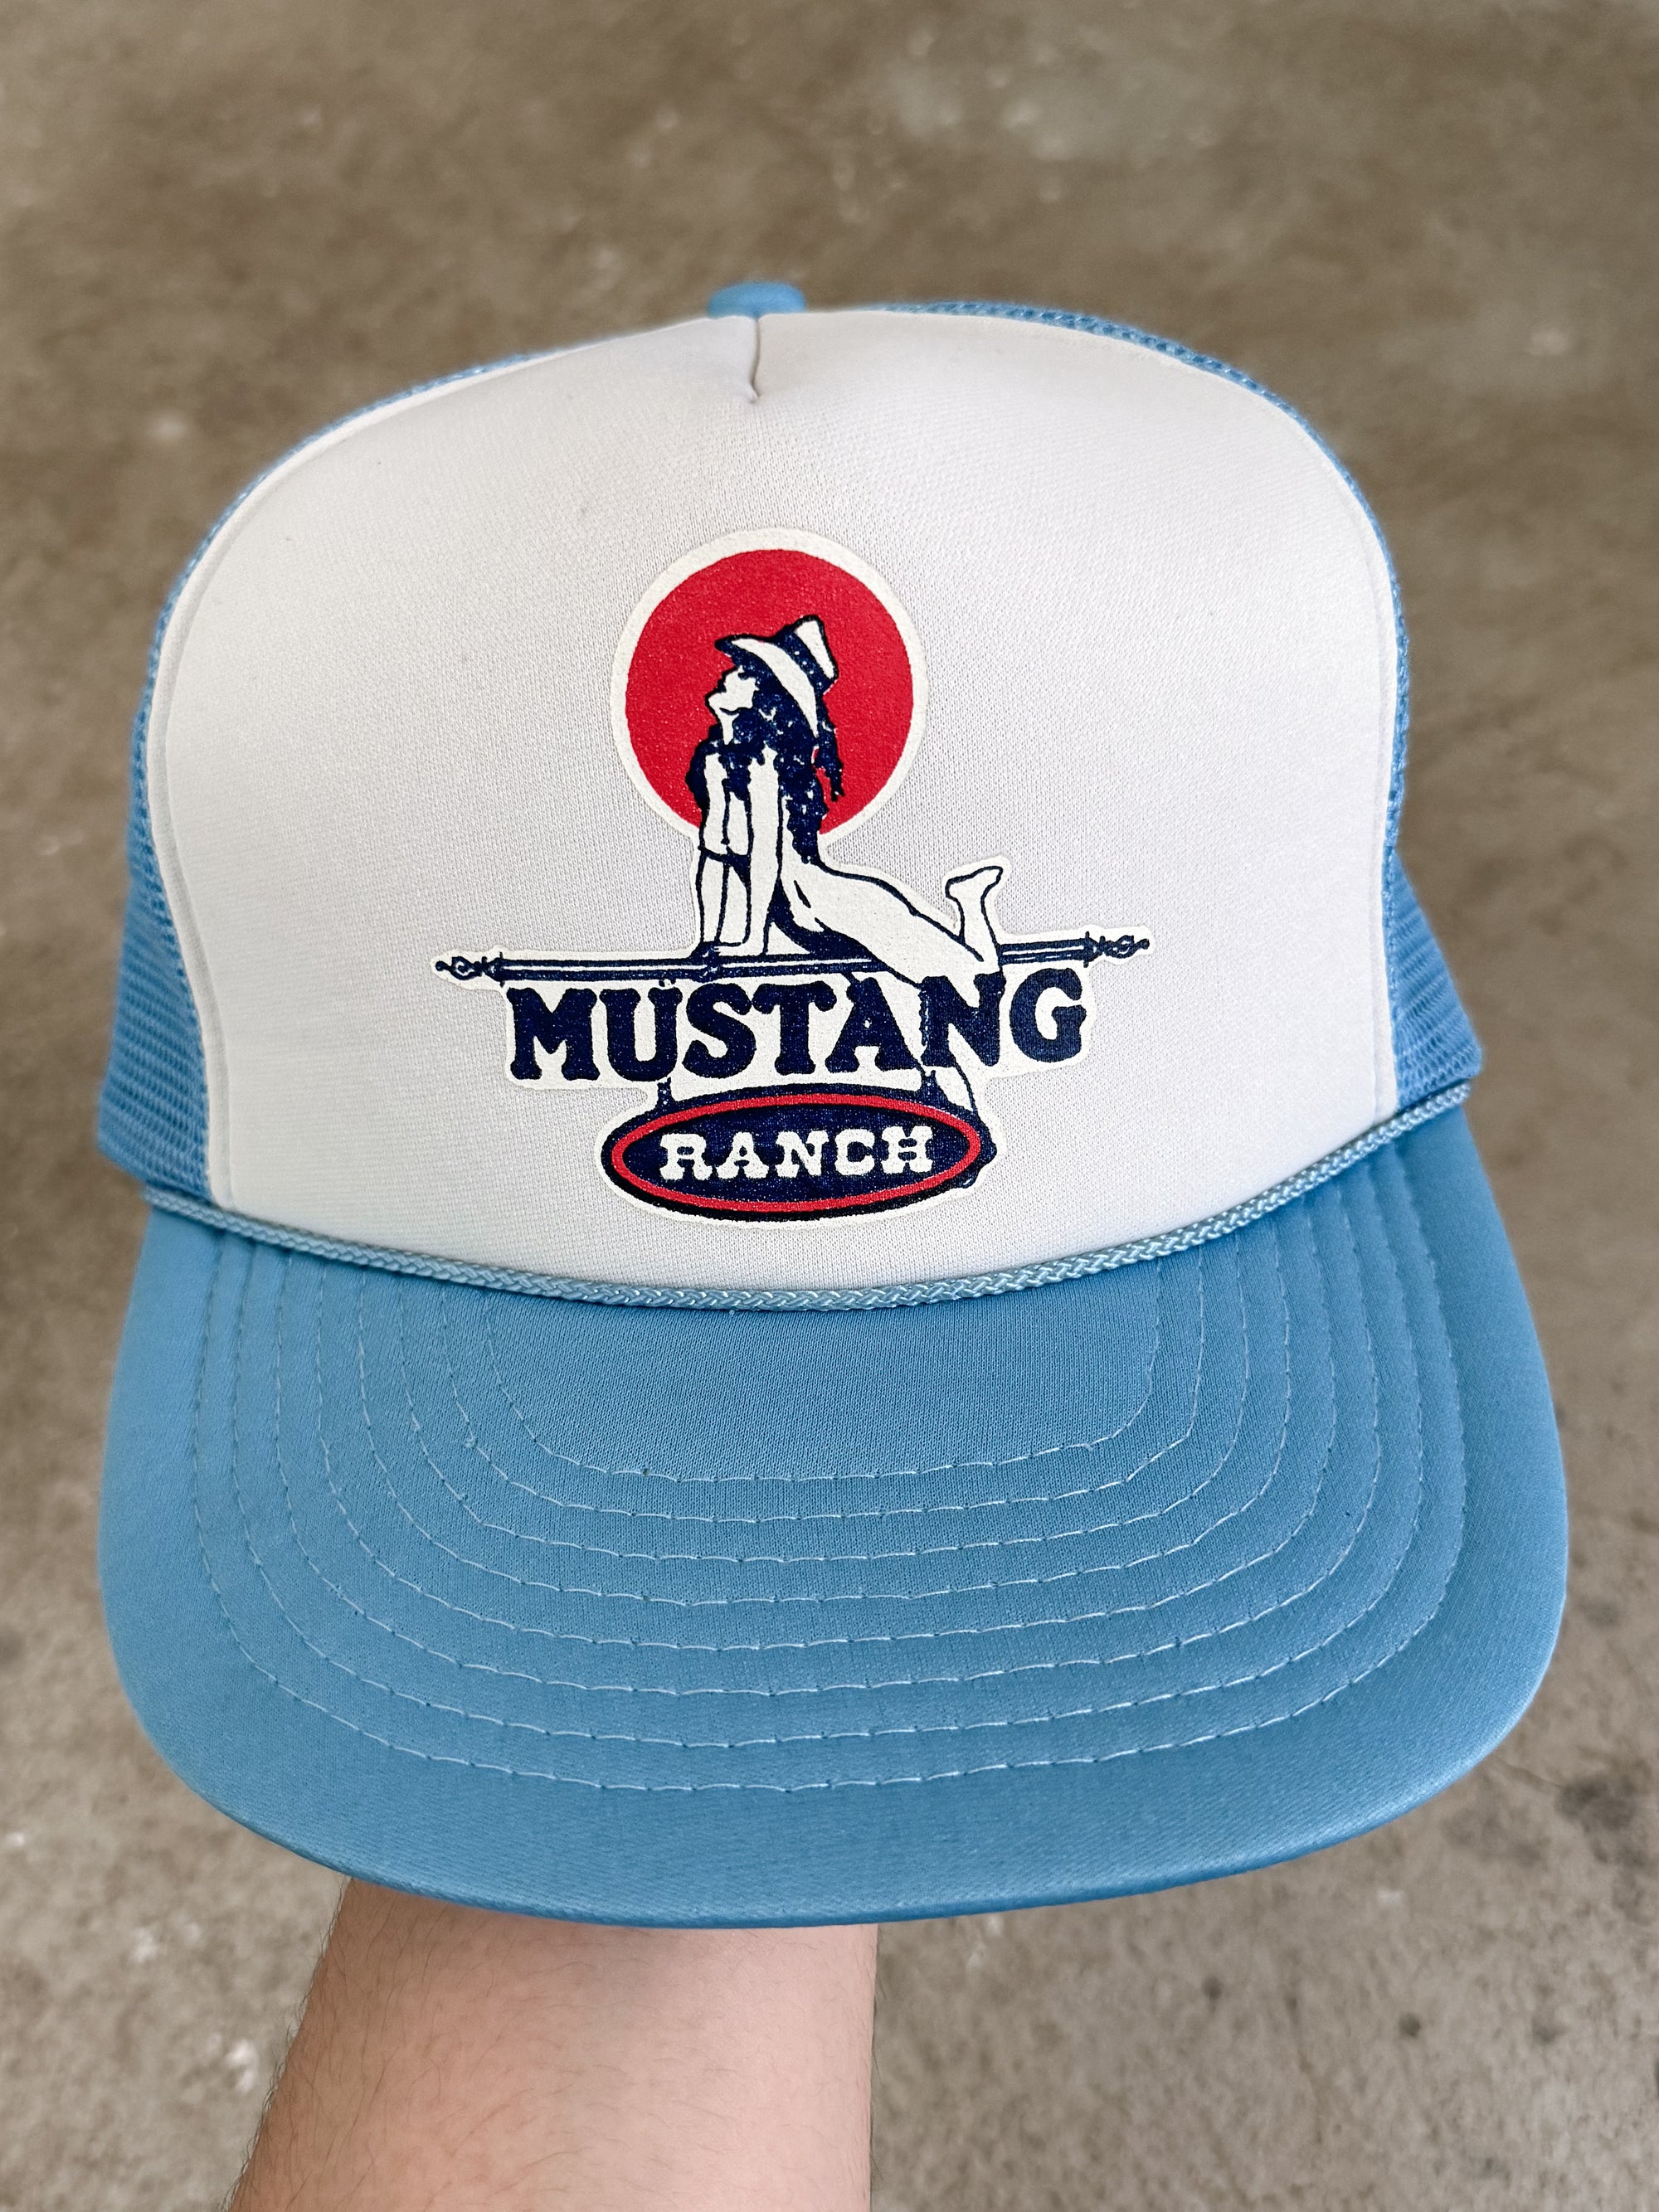 1980s/90s "Mustang Ranch" Trucker Hat